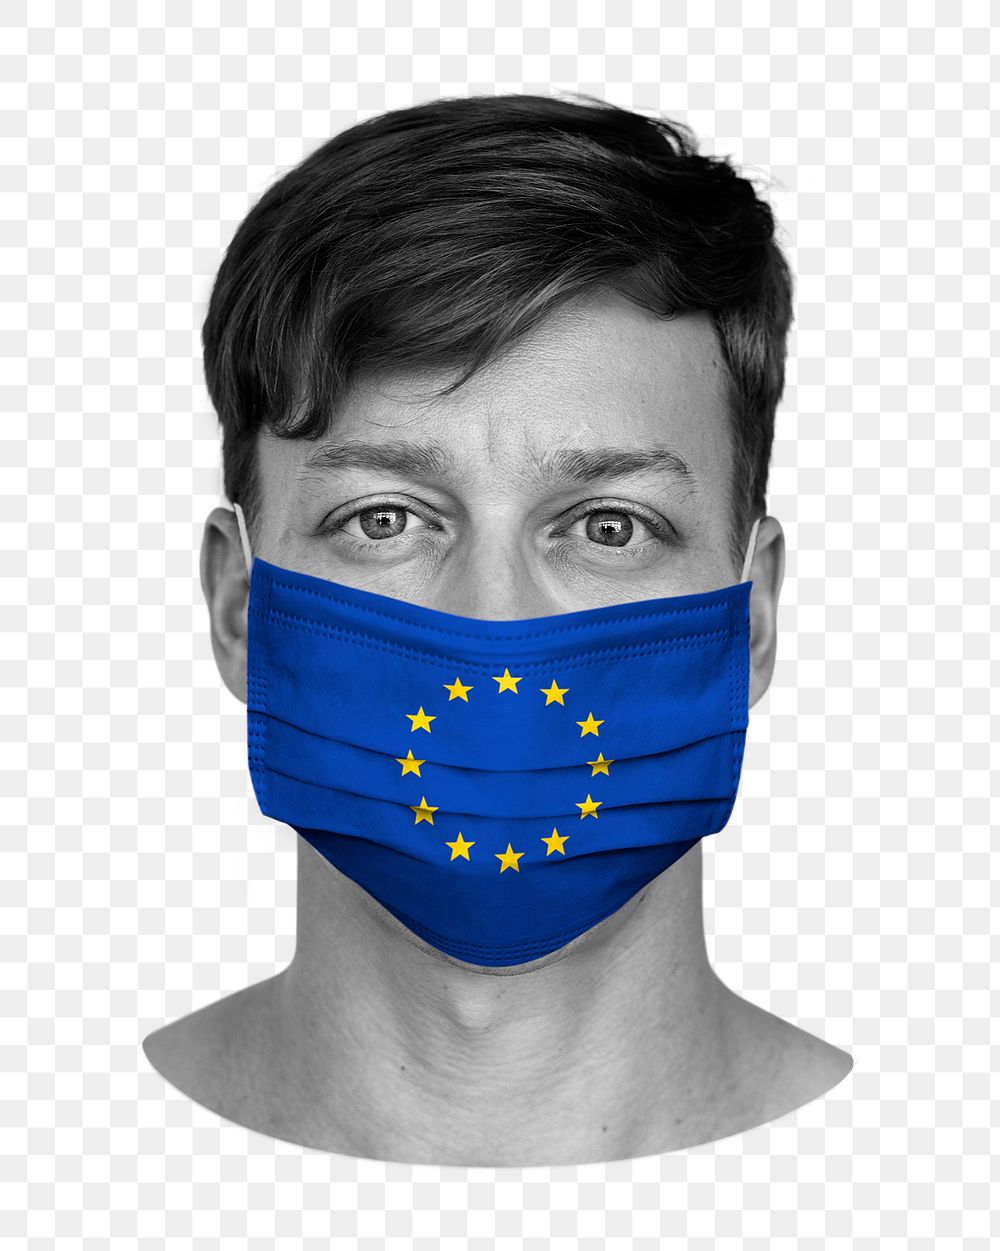 Png European flag, mask wearing man on transparent background